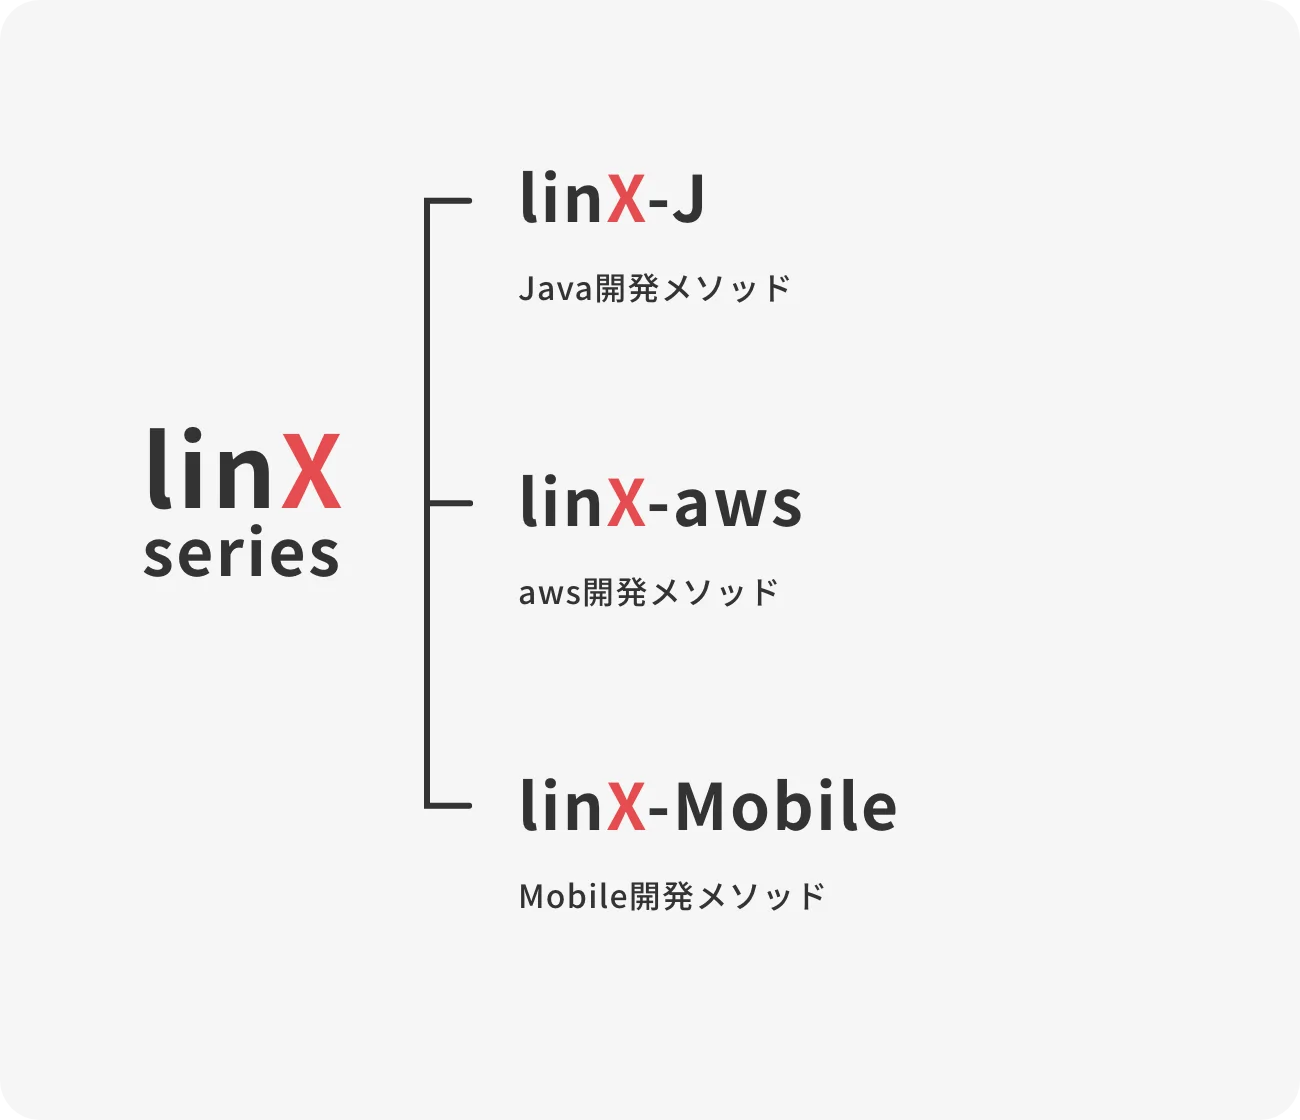 linX series：linX-J Java開発メソッド、linX-sws aws開発メソッド、linX-Mobile Mobile開発メソッド